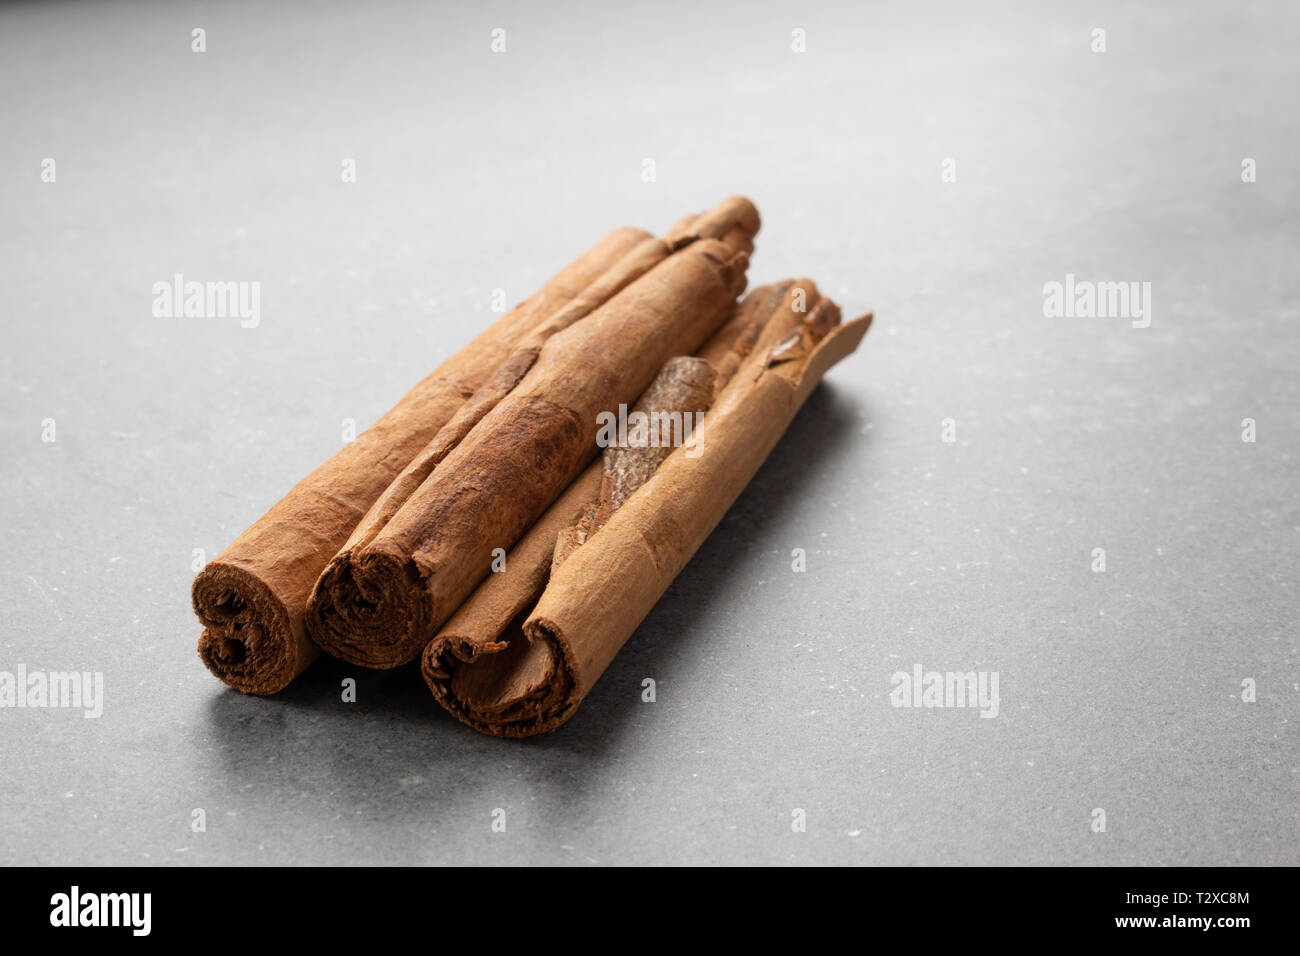 cinnamon sticks on gray background Stock Photo